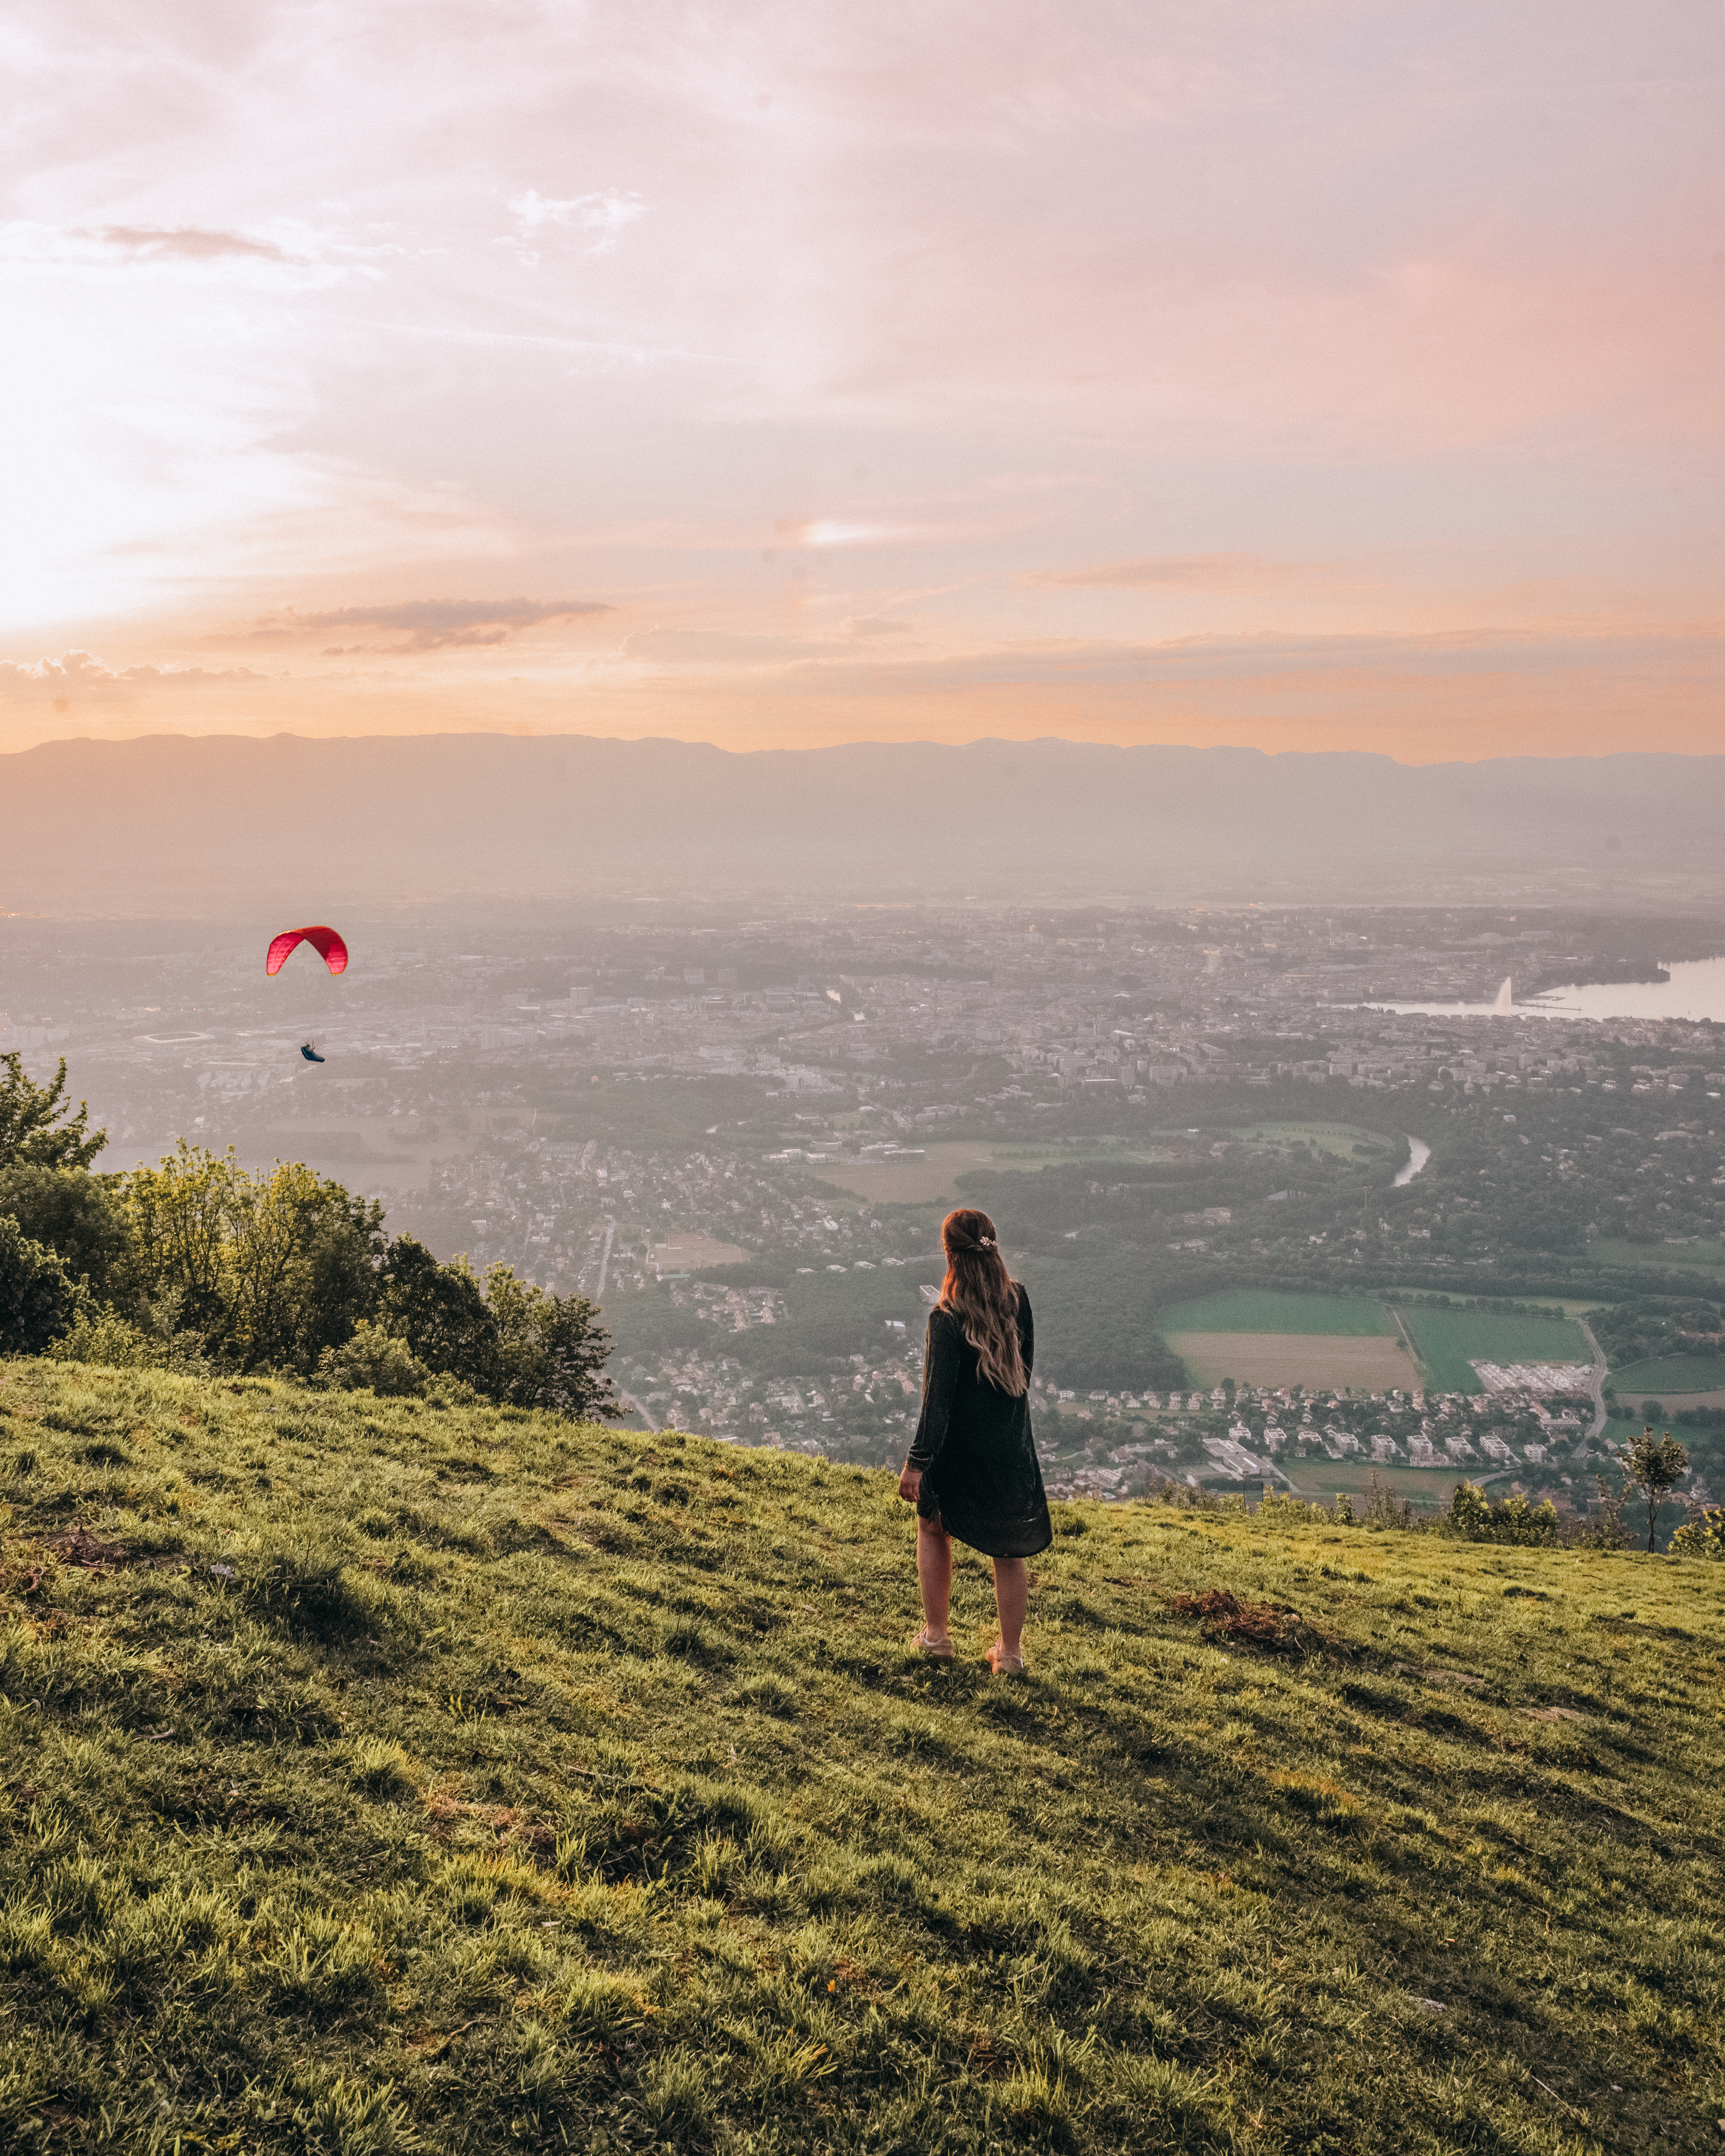 Paragliding into sunset, Mount Salève - Geneva in the background